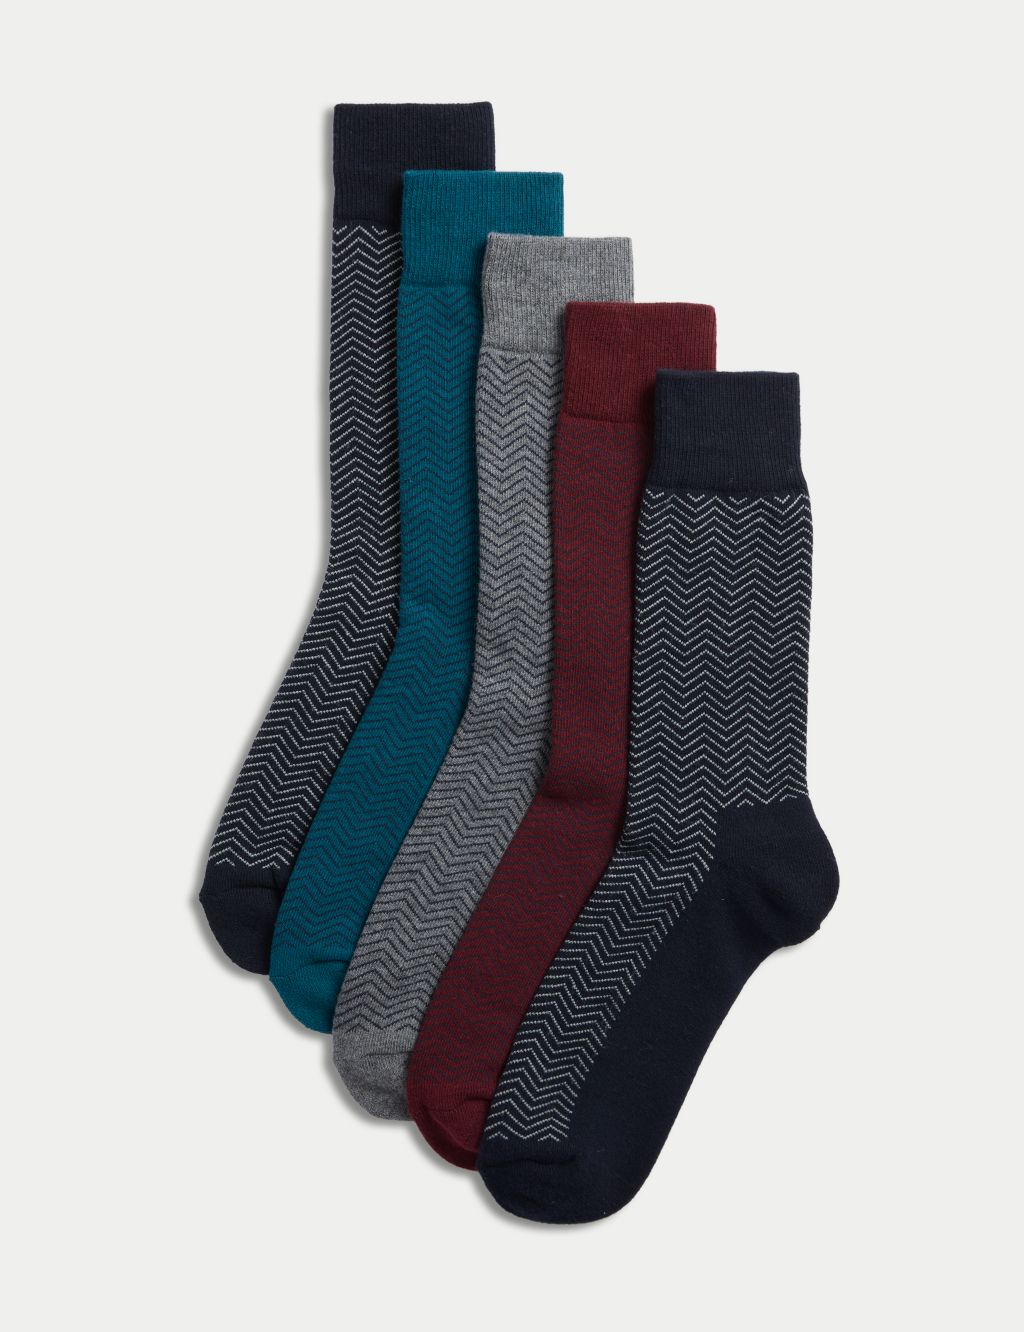 Men's Novelty Socks, Fun Socks